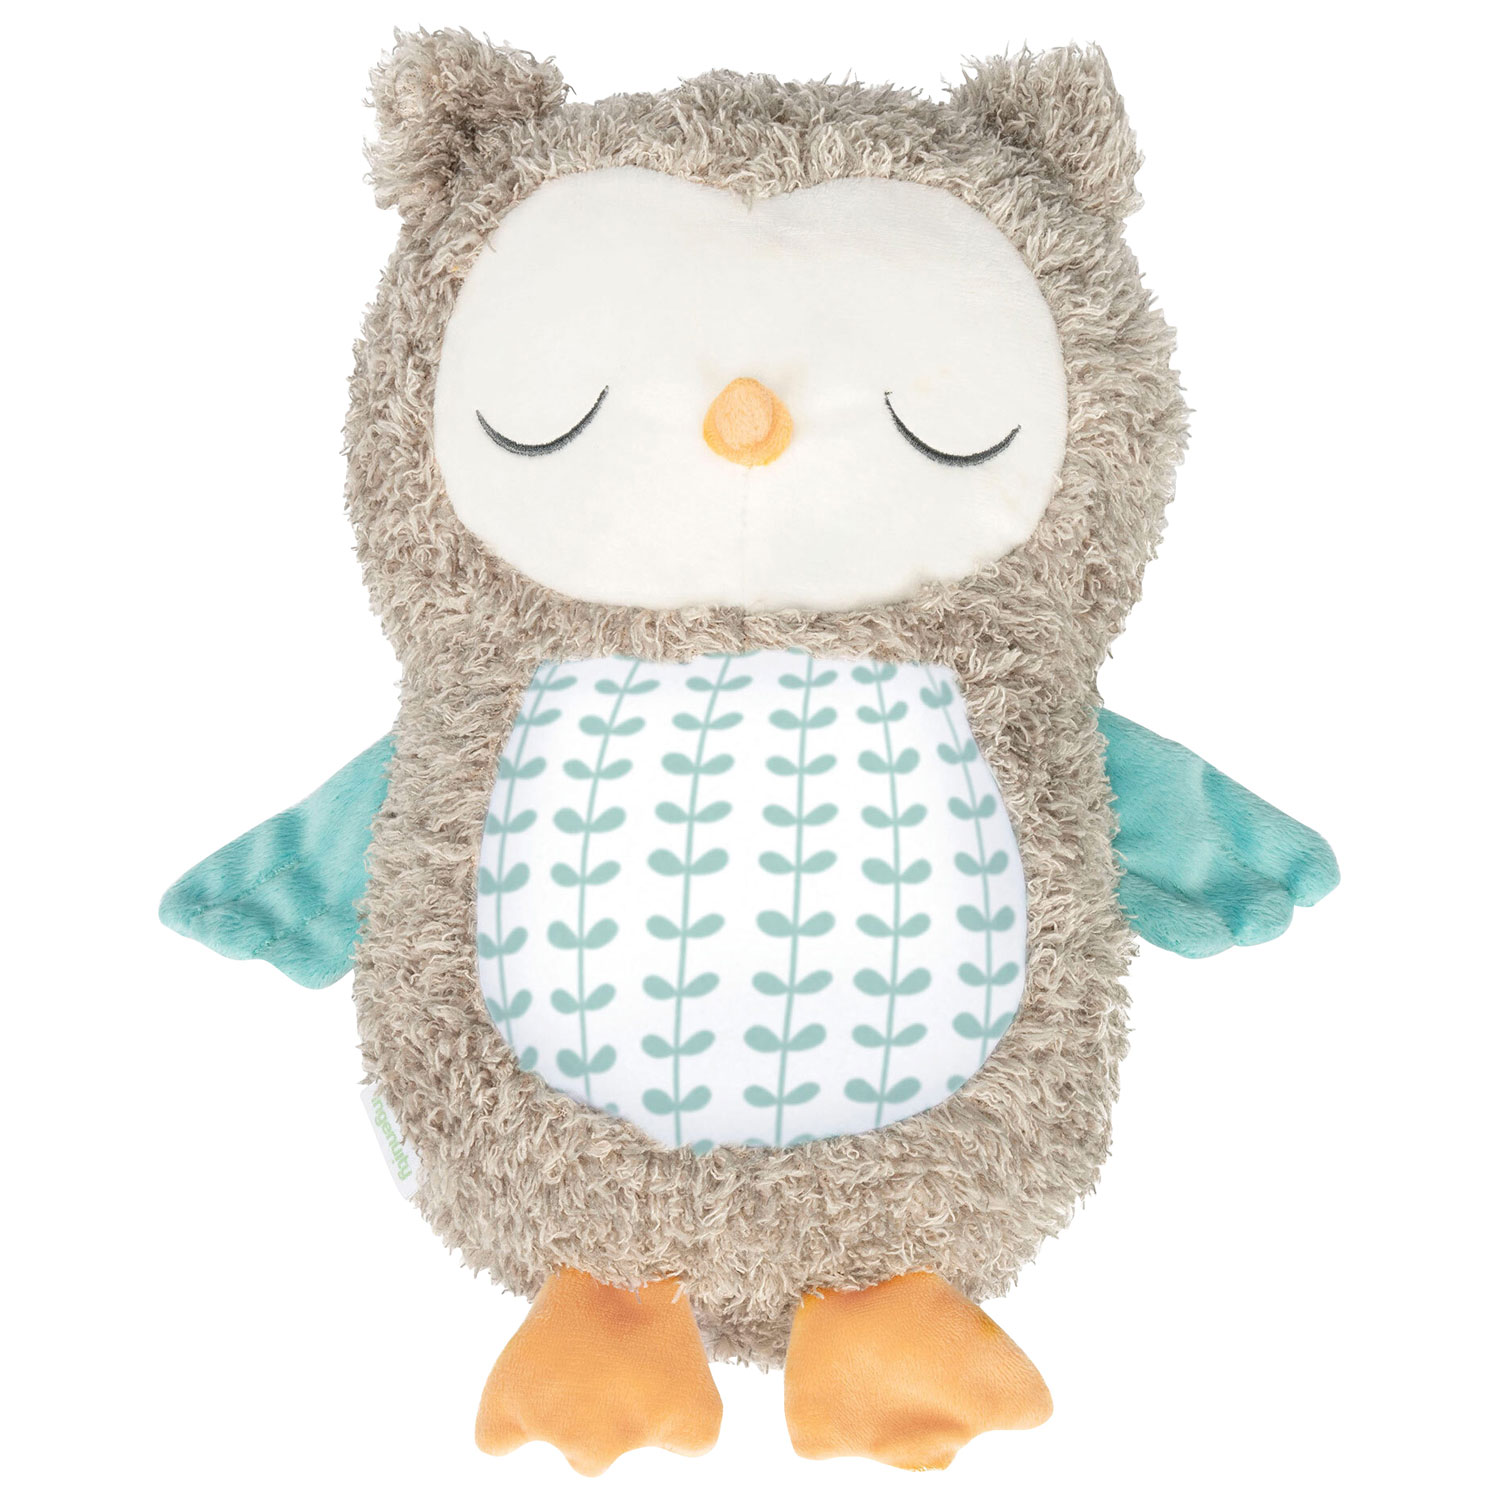 Ingenuity Snuggle Sounds Soothing Plush Toy - Nally Owl